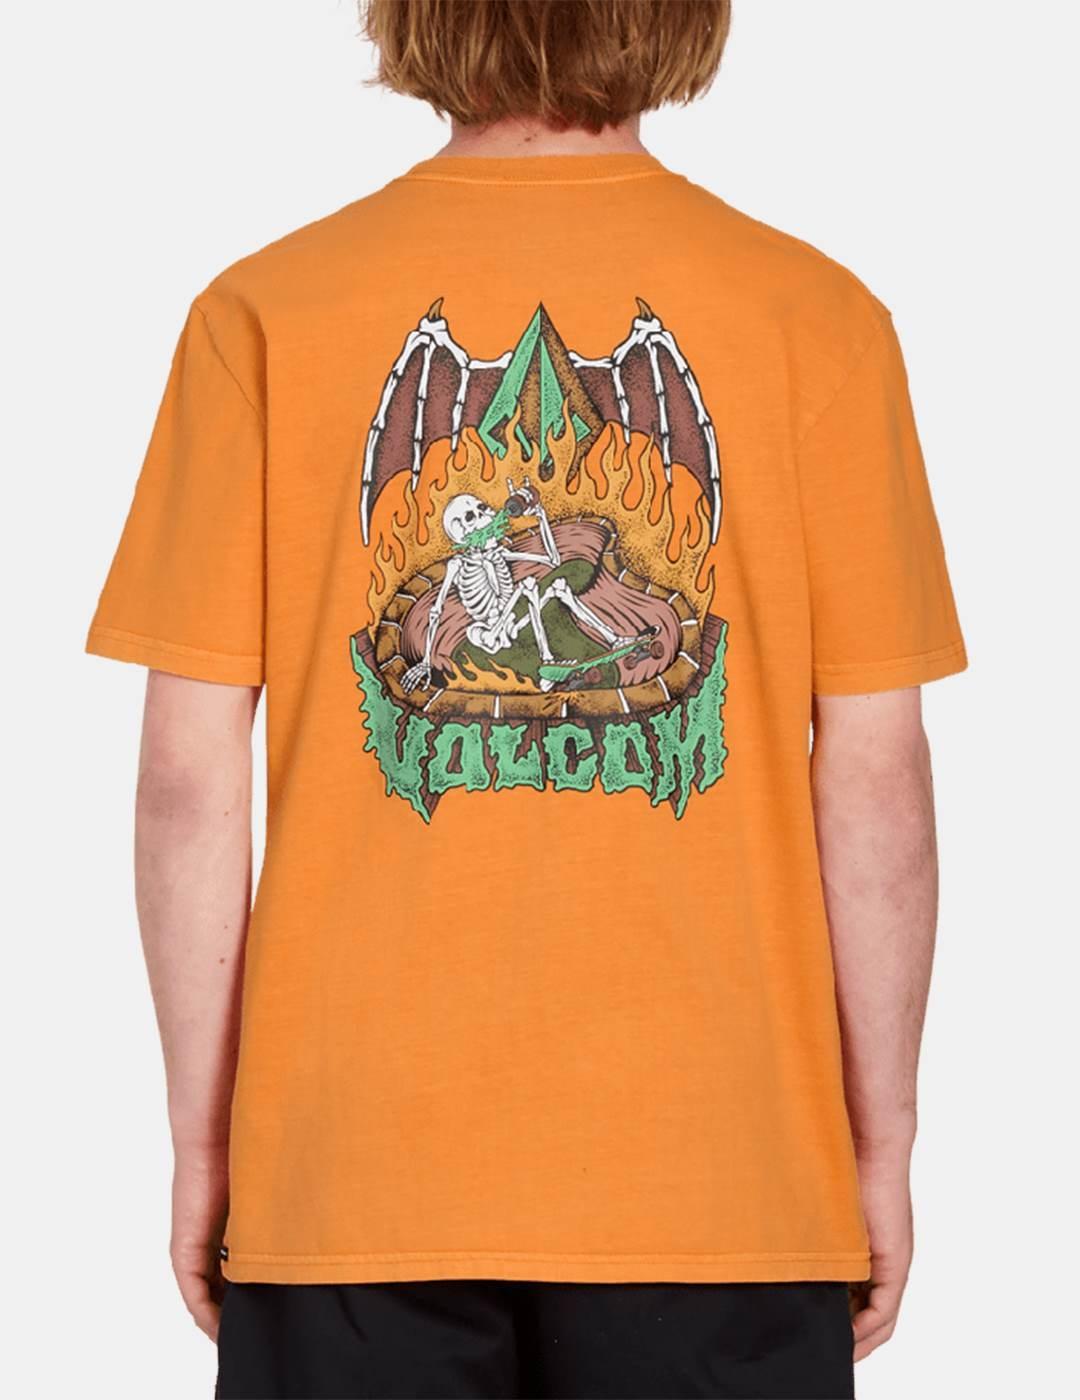 Camiseta Volcom Nofing Naranja